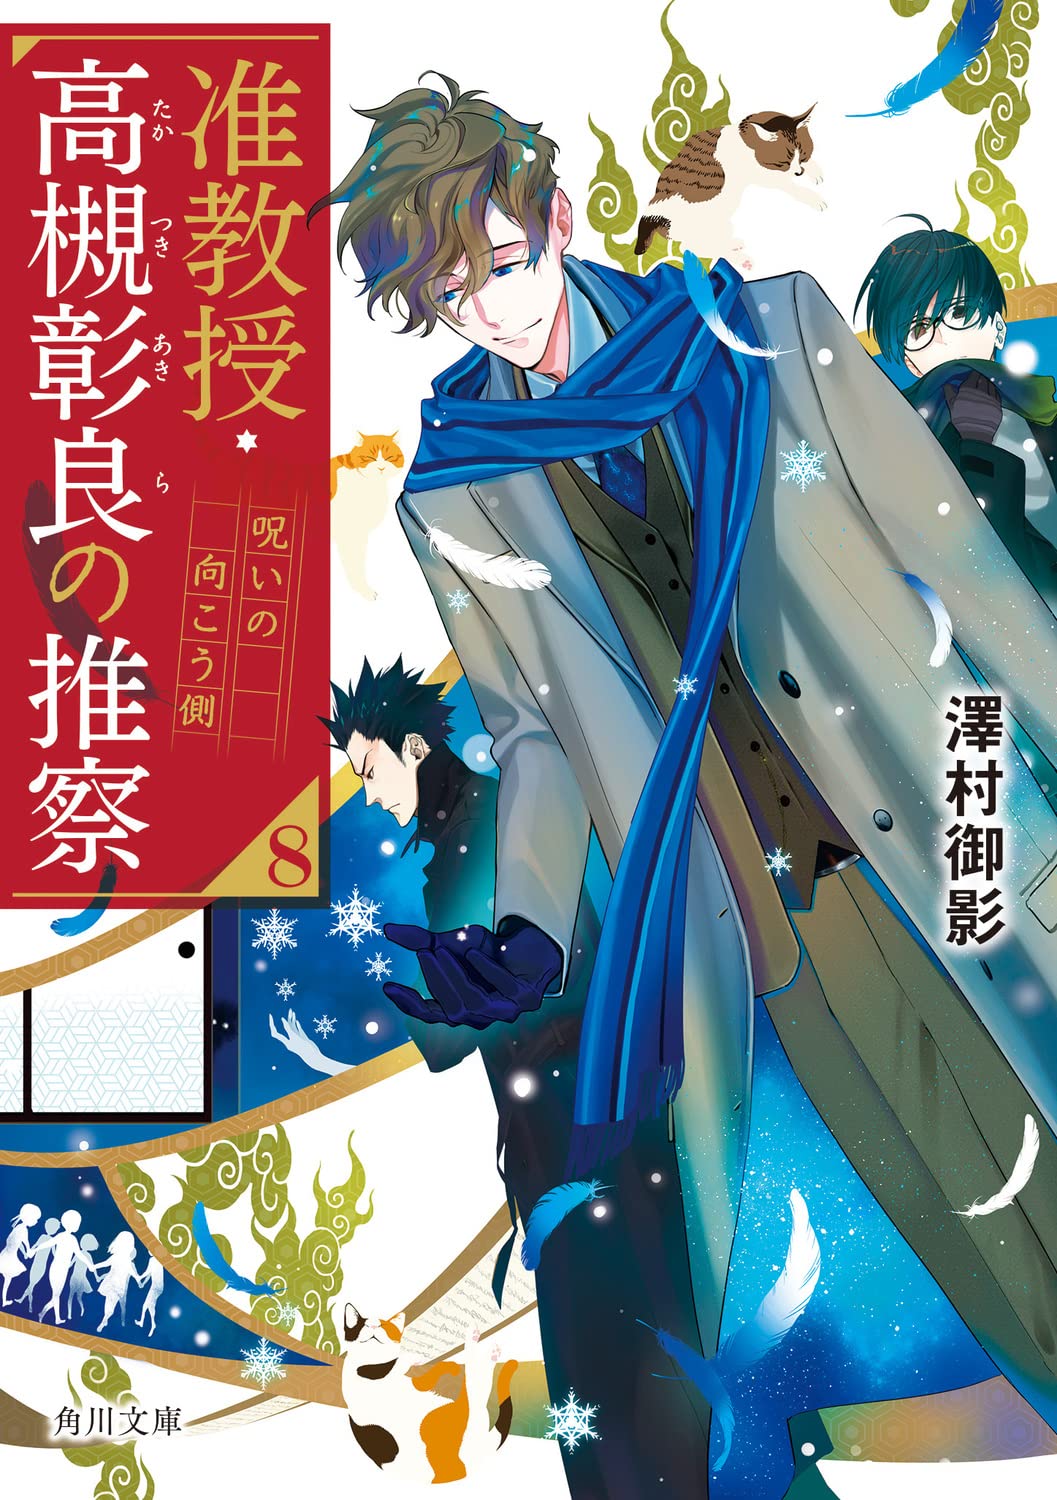 Youkoso Jitsuryoku  Spoilers da Light Novel - HGS ANIME